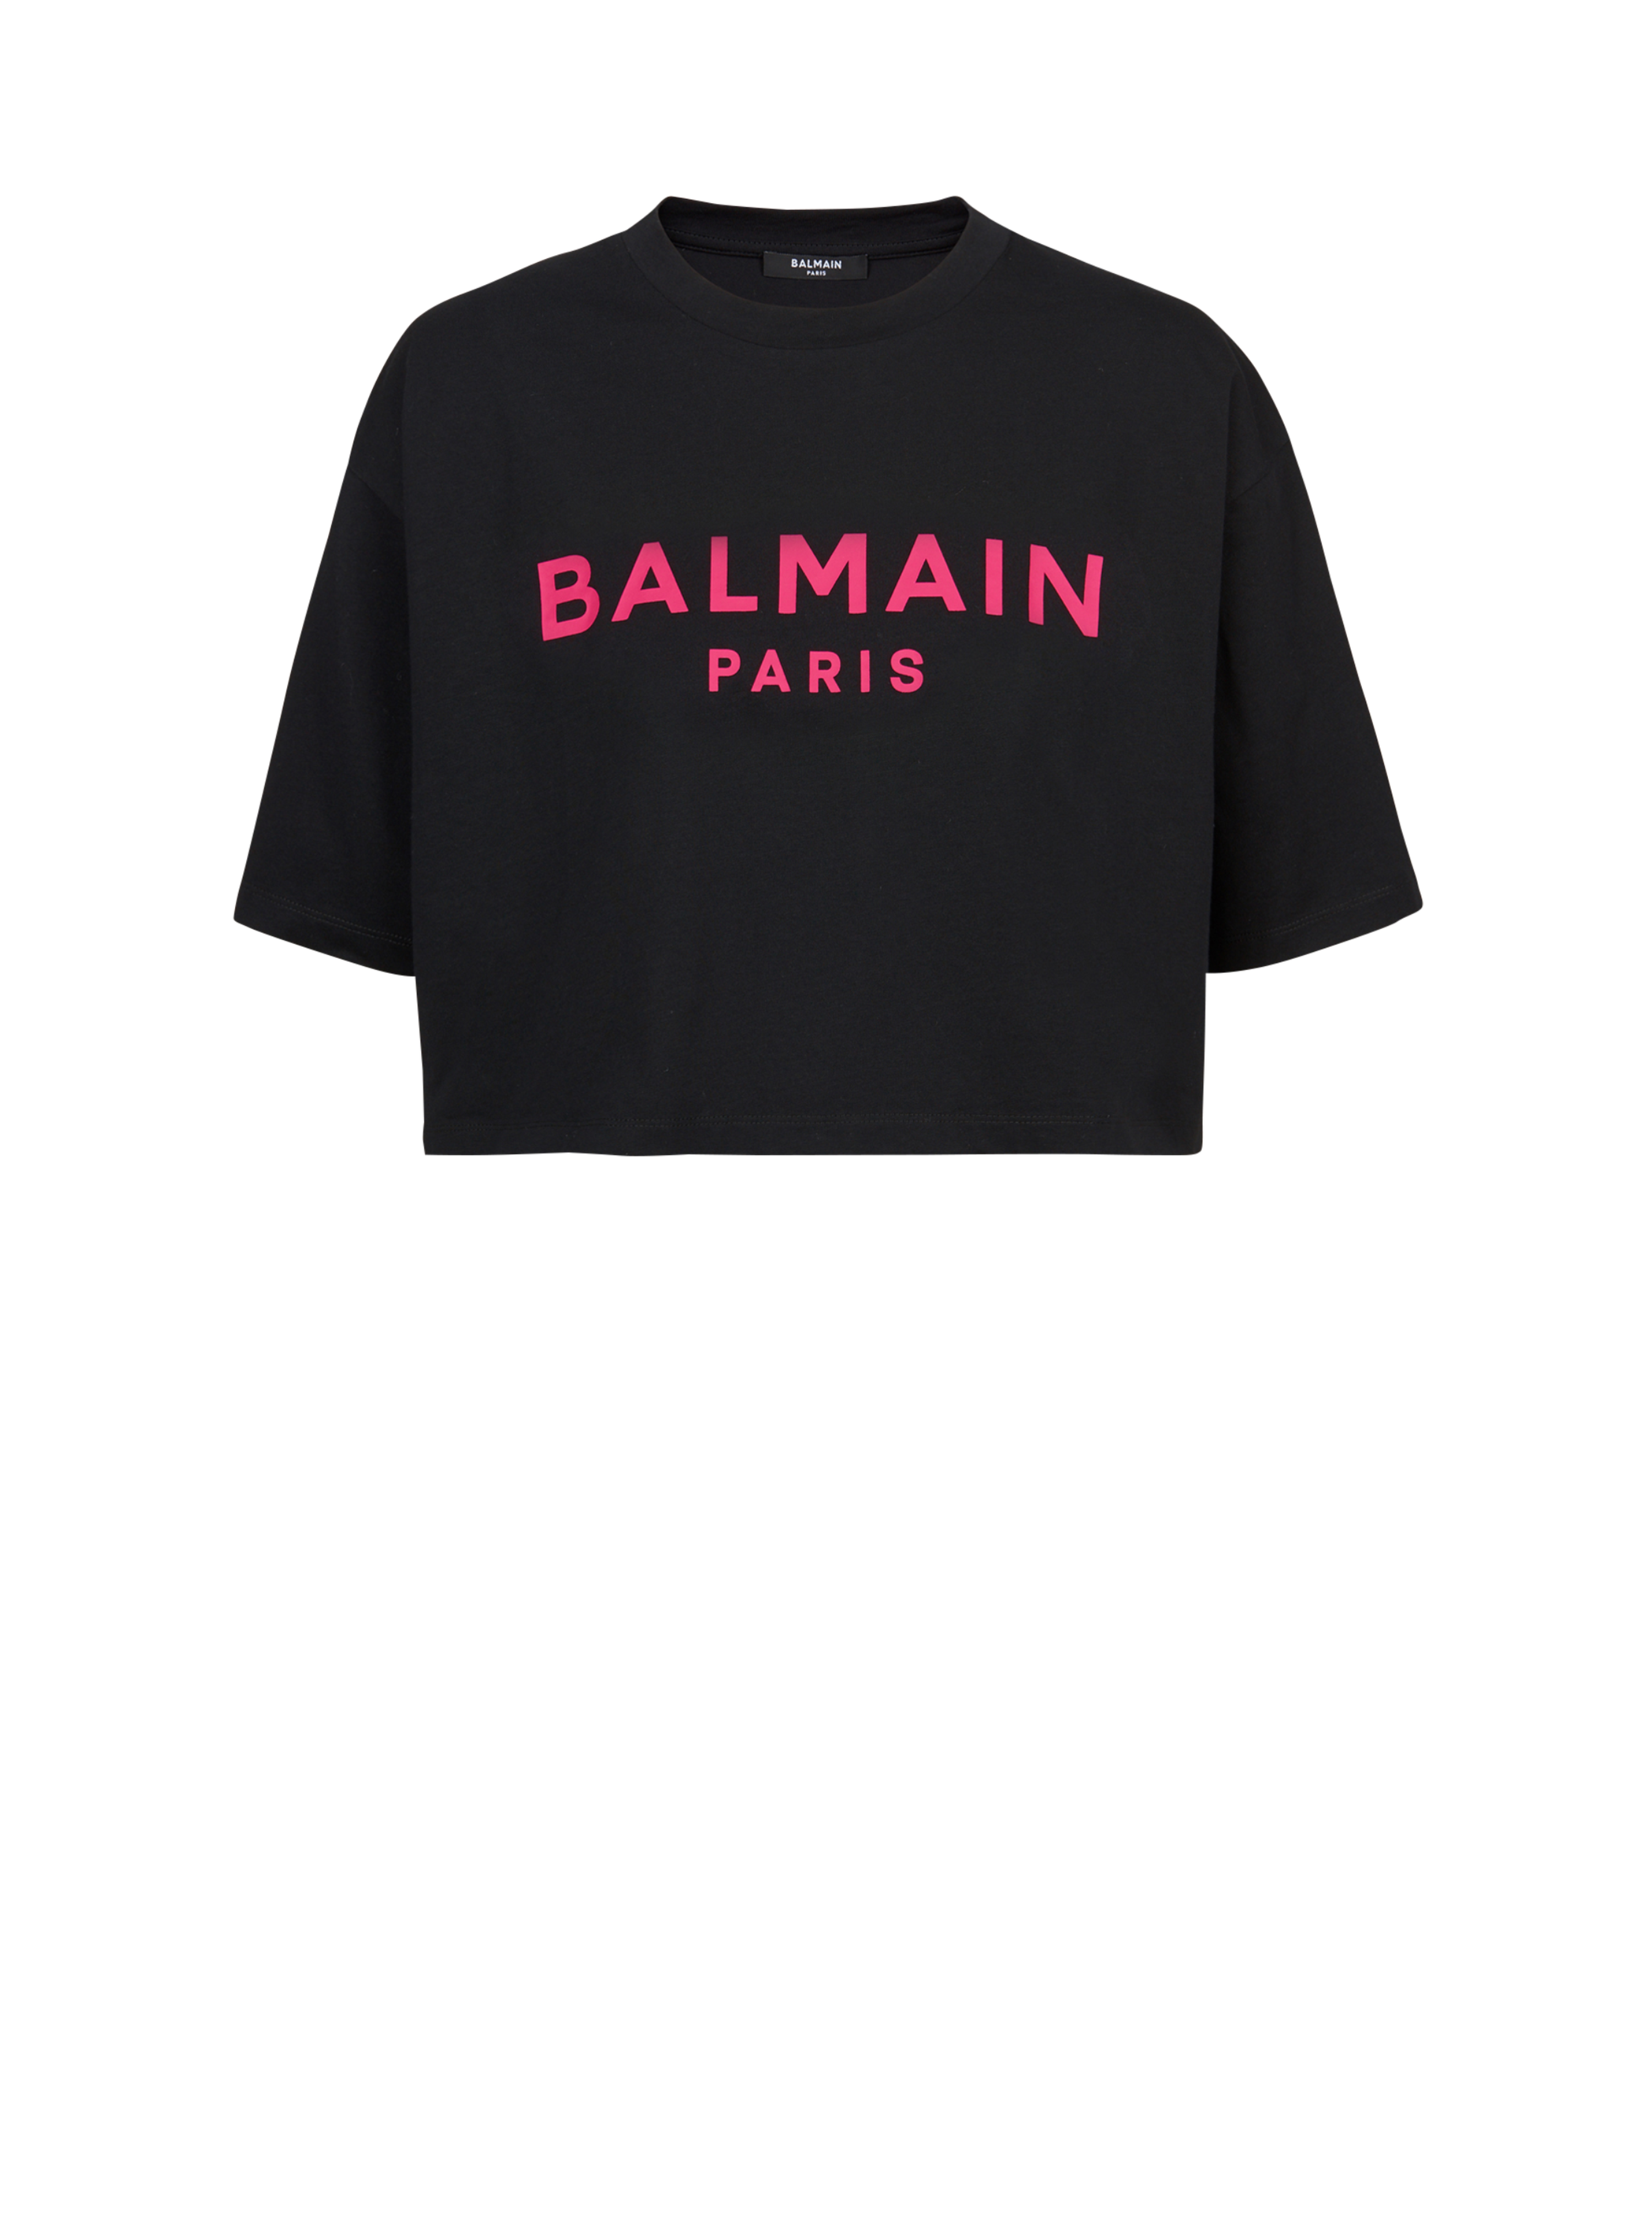 EXCLUSIVE - Cropped cotton T-shirt with Balmain logo print, pink